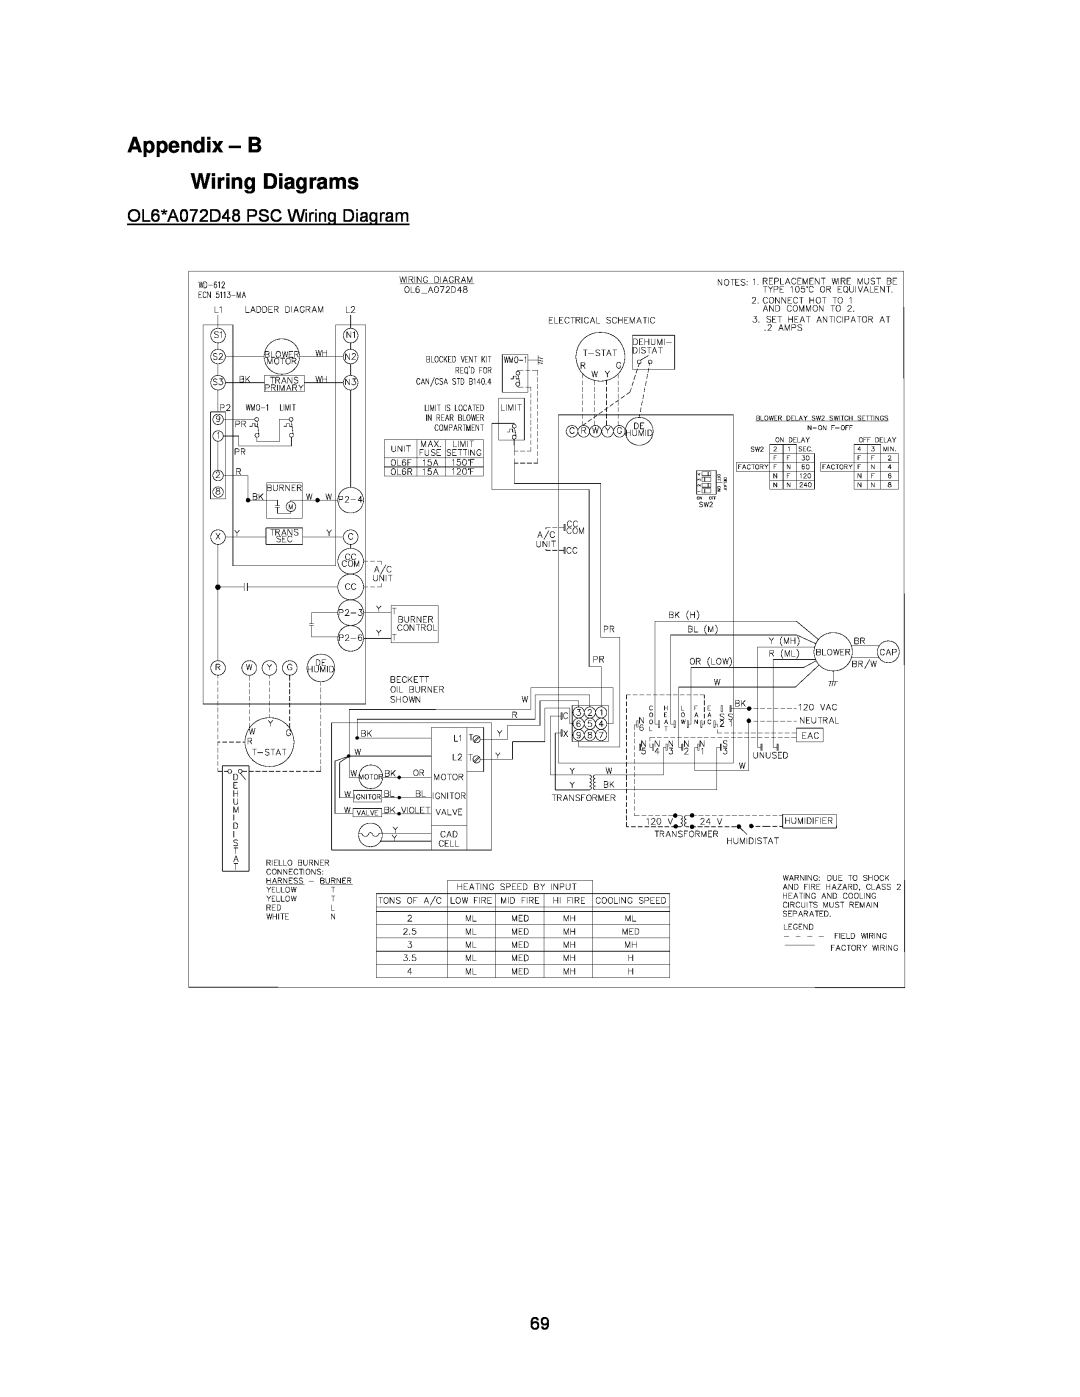 Thermo Products OL6FA072DV5(B/R), OL6RA072D48(B/R) Appendix - B Wiring Diagrams, OL6*A072D48 PSC Wiring Diagram 